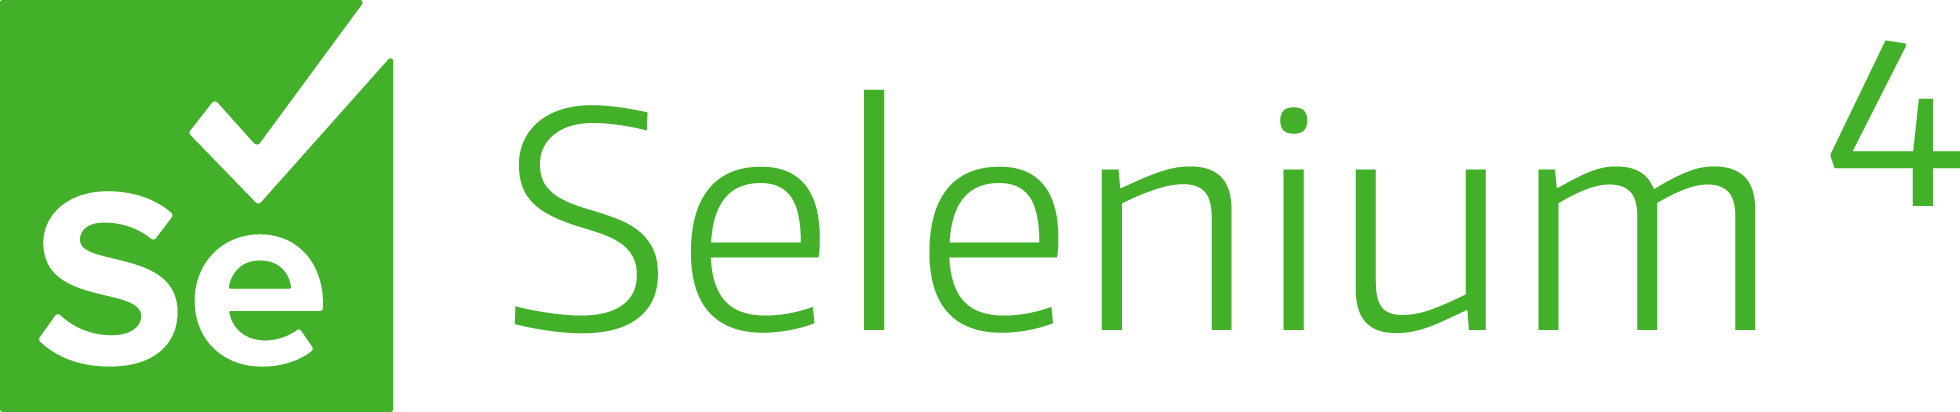 Selenium Green Logo